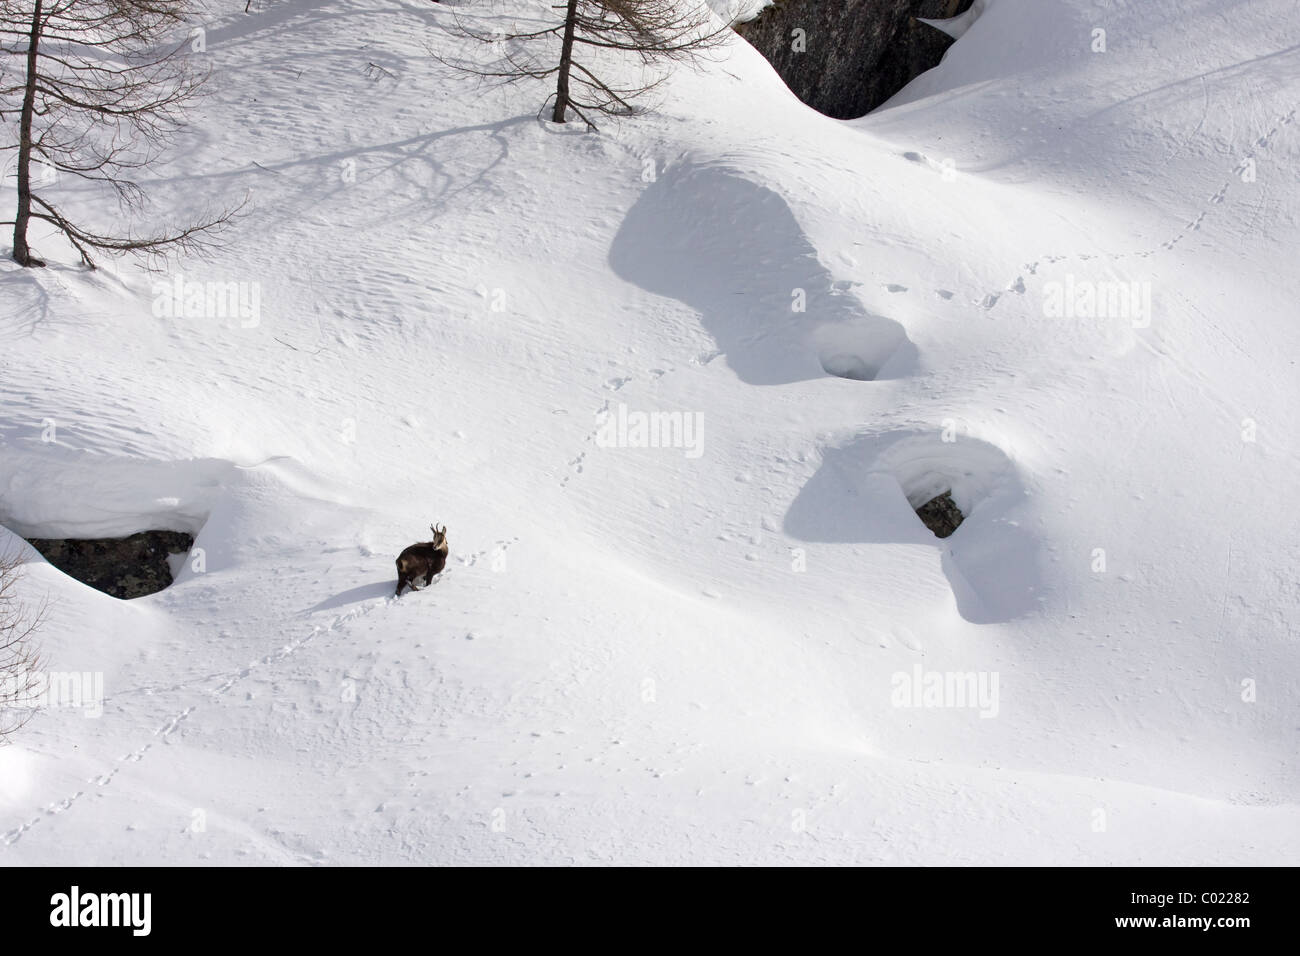 Chamois in deep powder snow Stock Photo